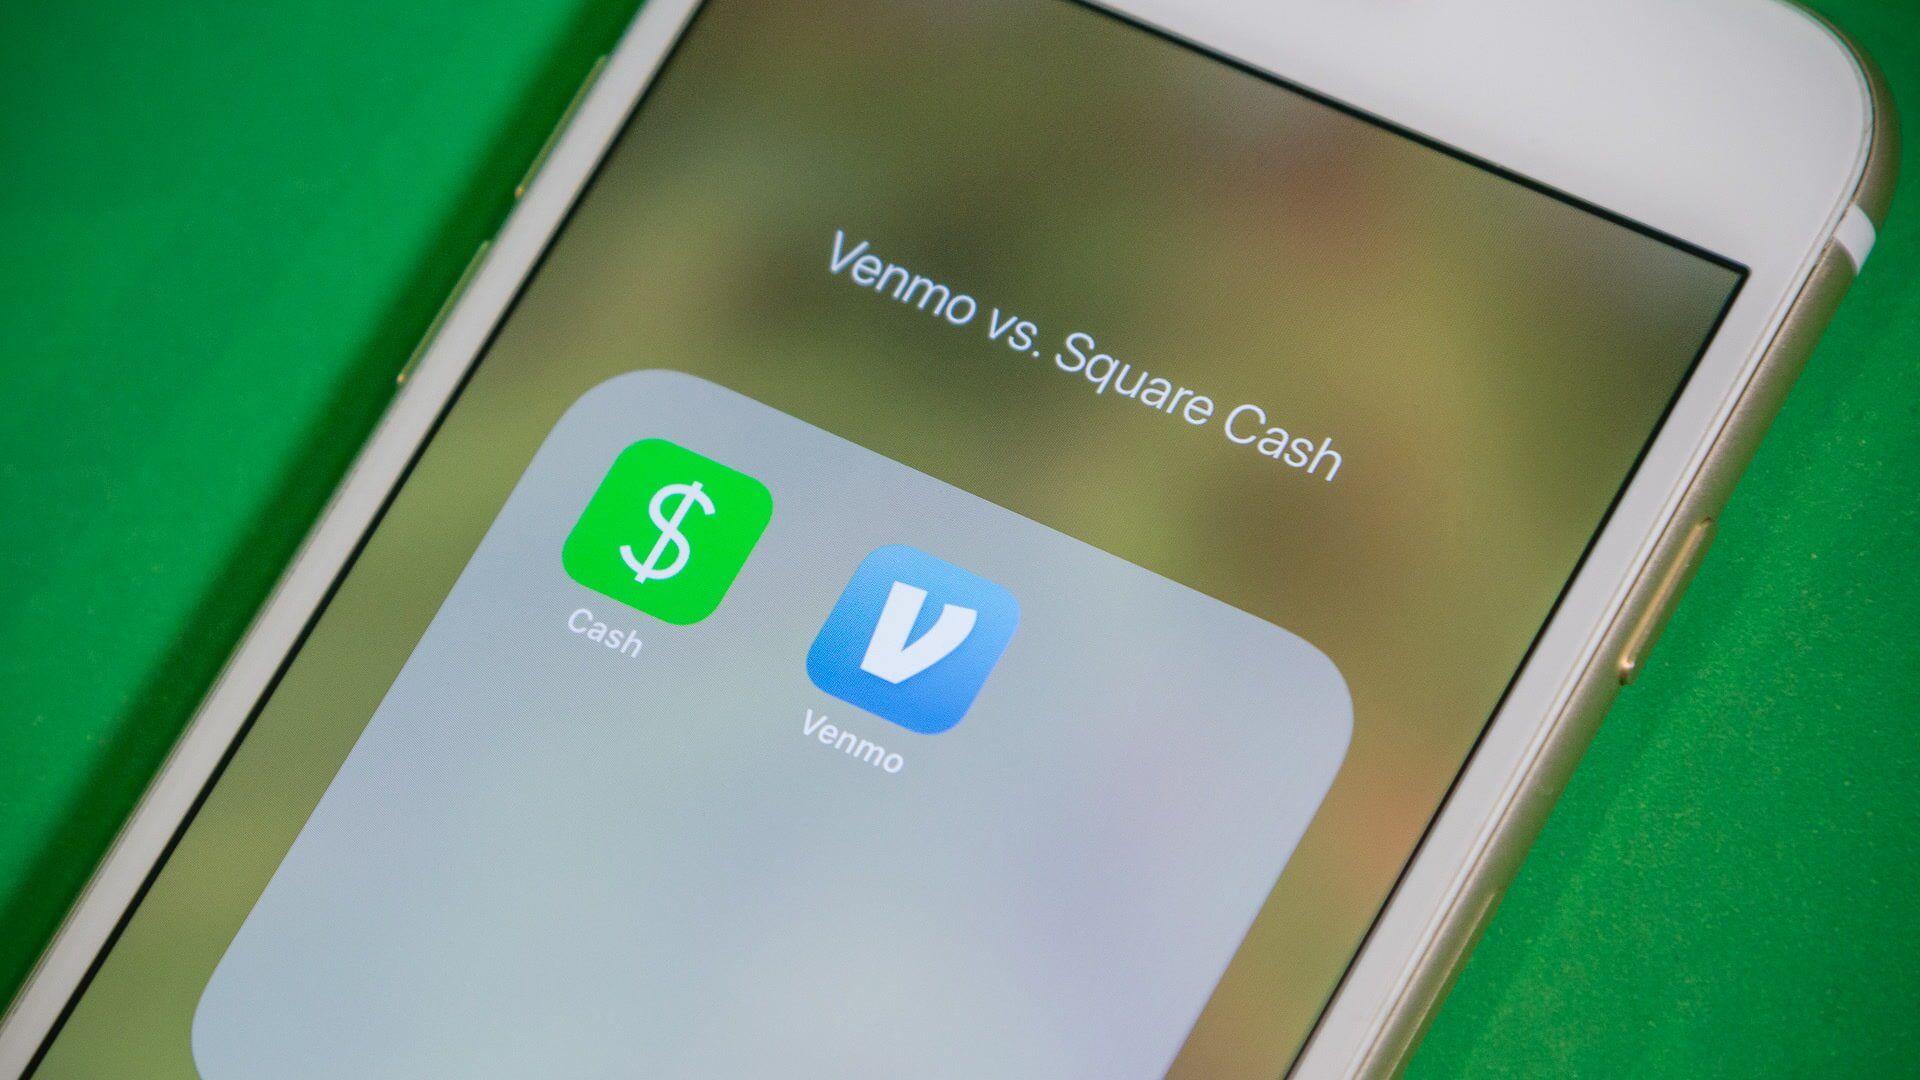 Cmall Cash App Logo - Venmo App vs. Square Cash App: Which Is Better? | GOBankingRates